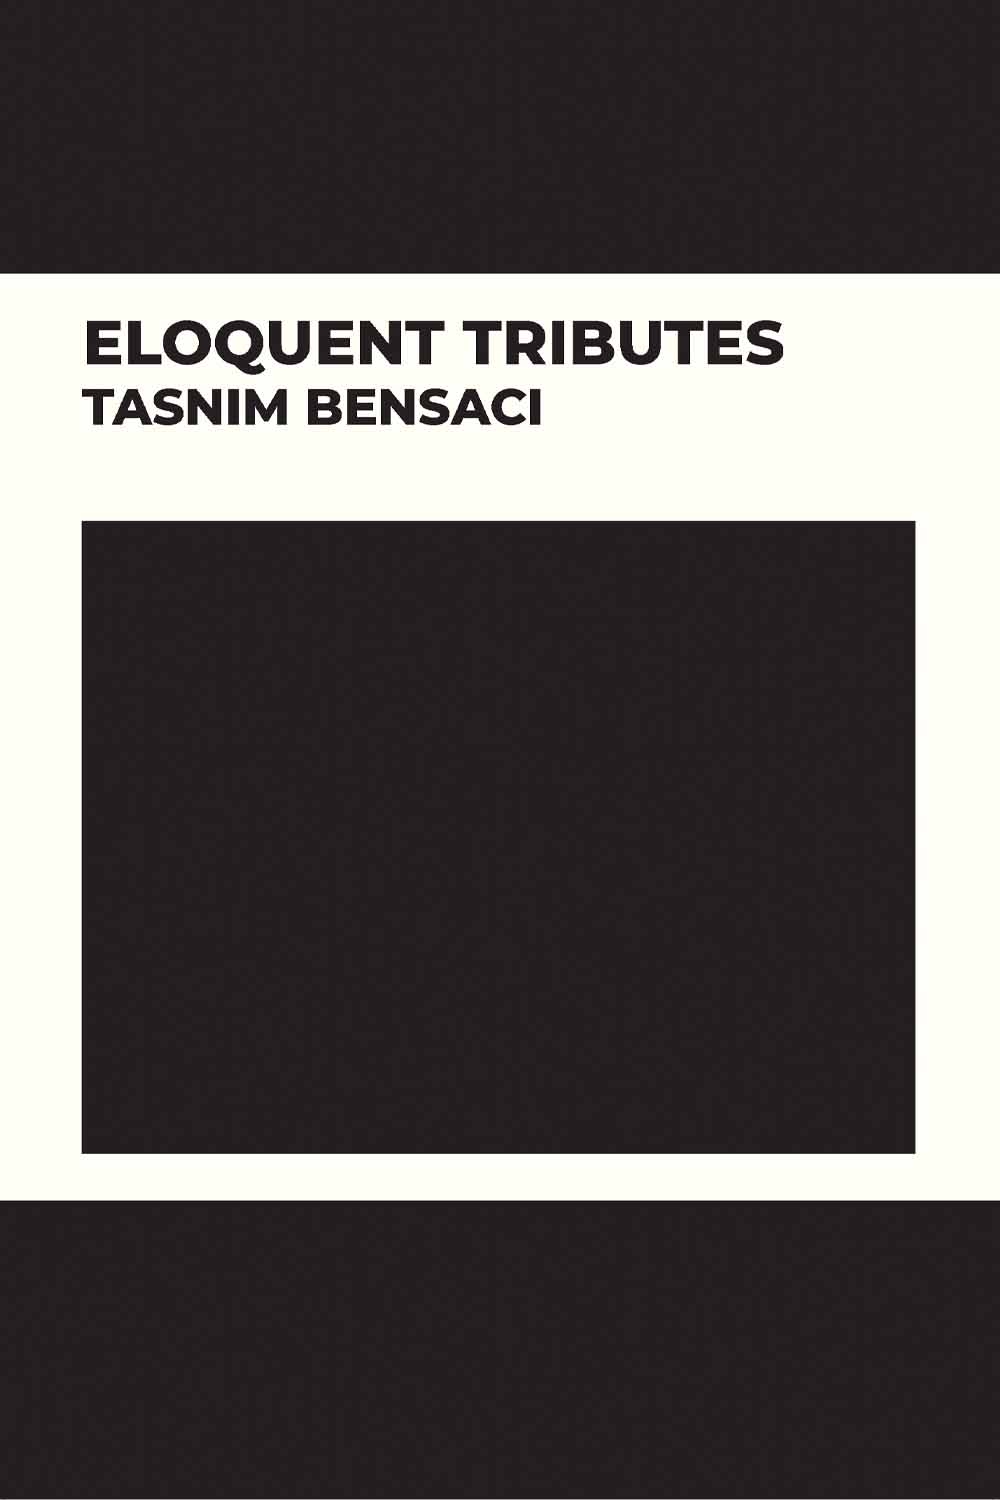 Eloquent Tributes by Tasnim Bensaci